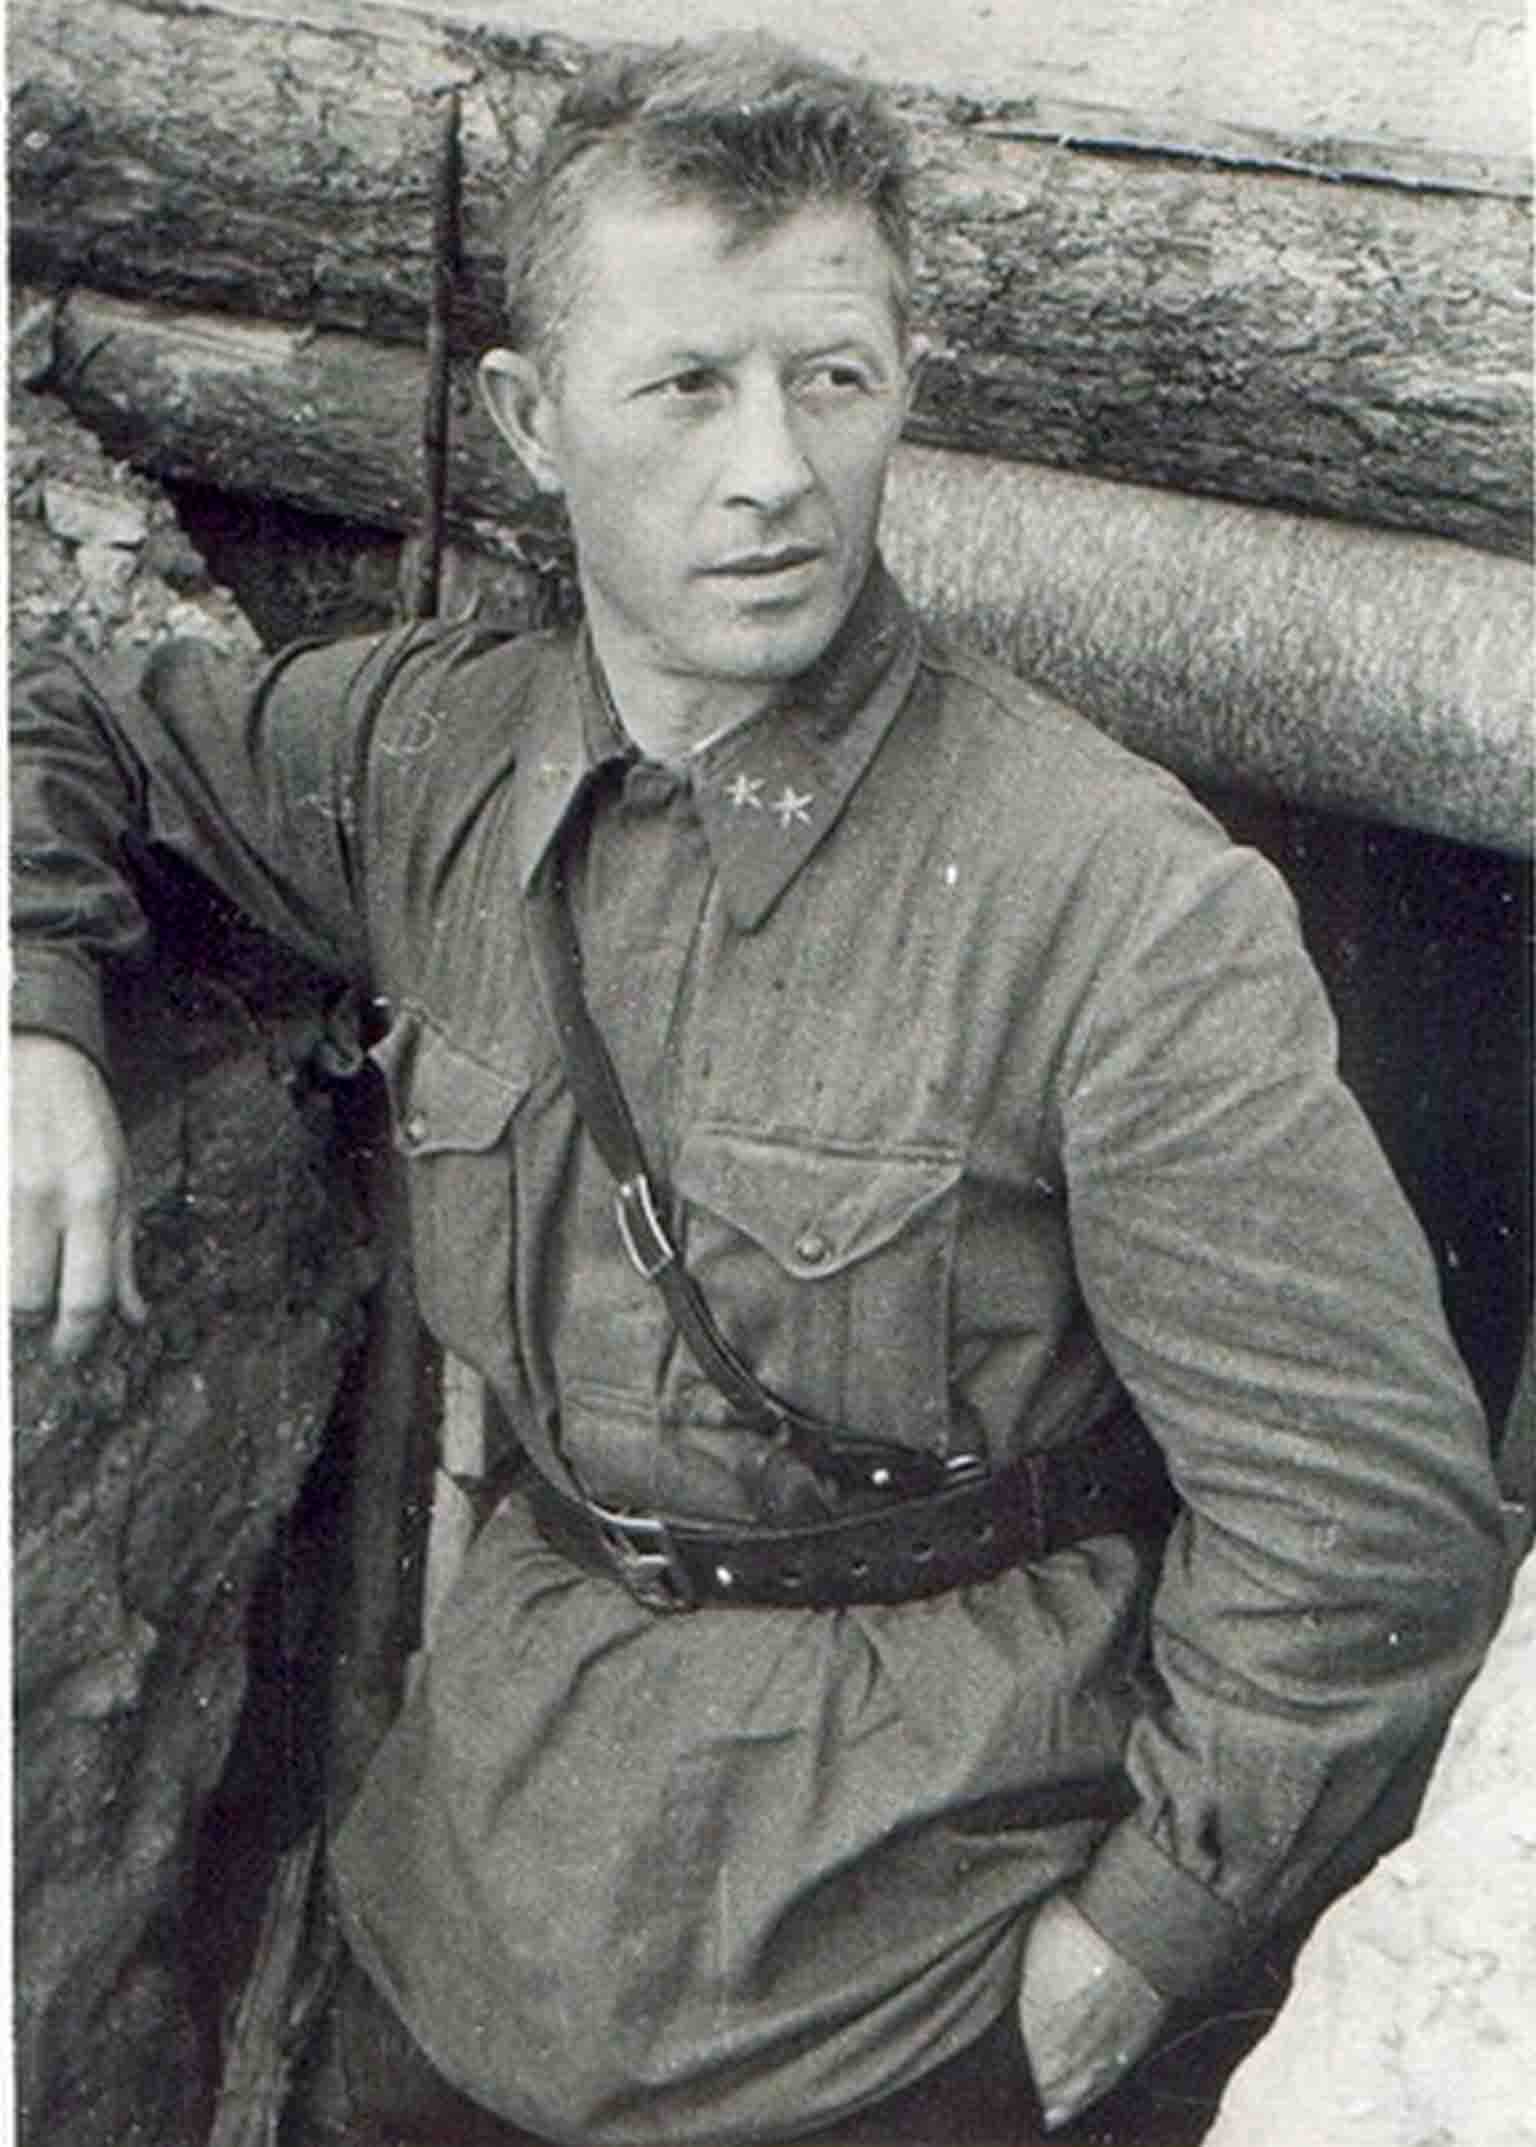 Major-General Rodimtsev